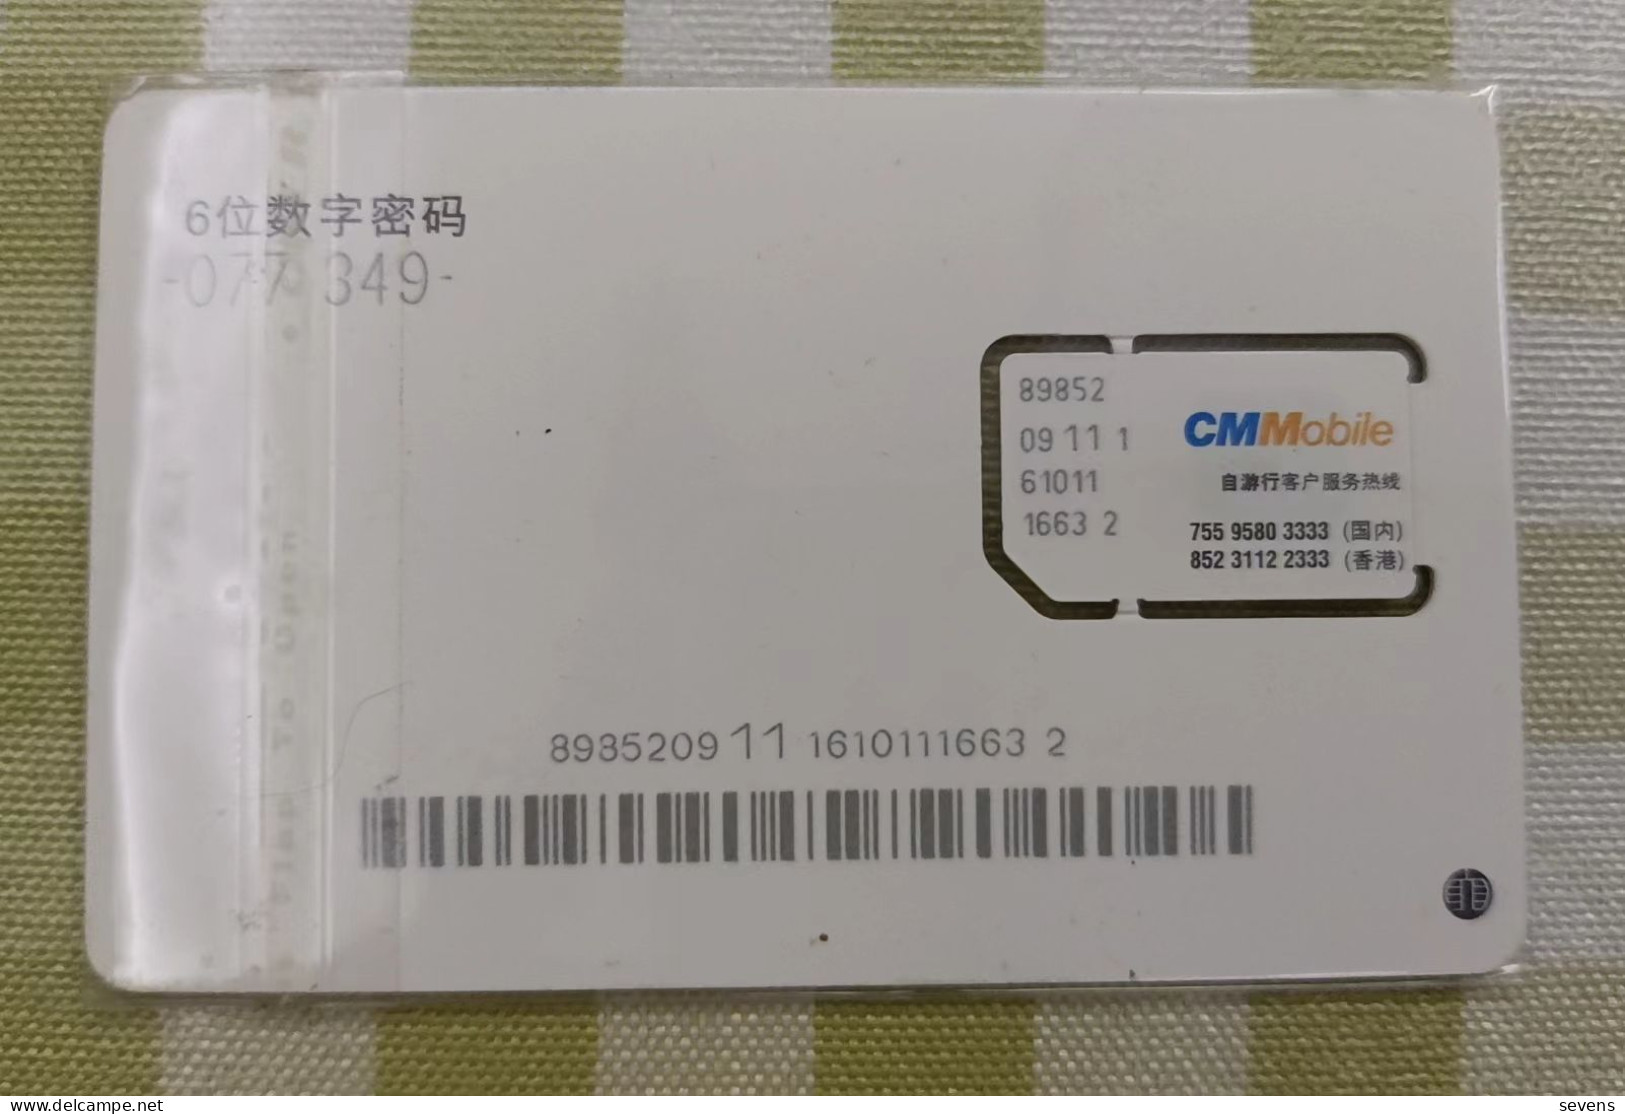 CM Bobile GSM SIM Card, For Tourist, Night View, Fixed Chip - Hong Kong